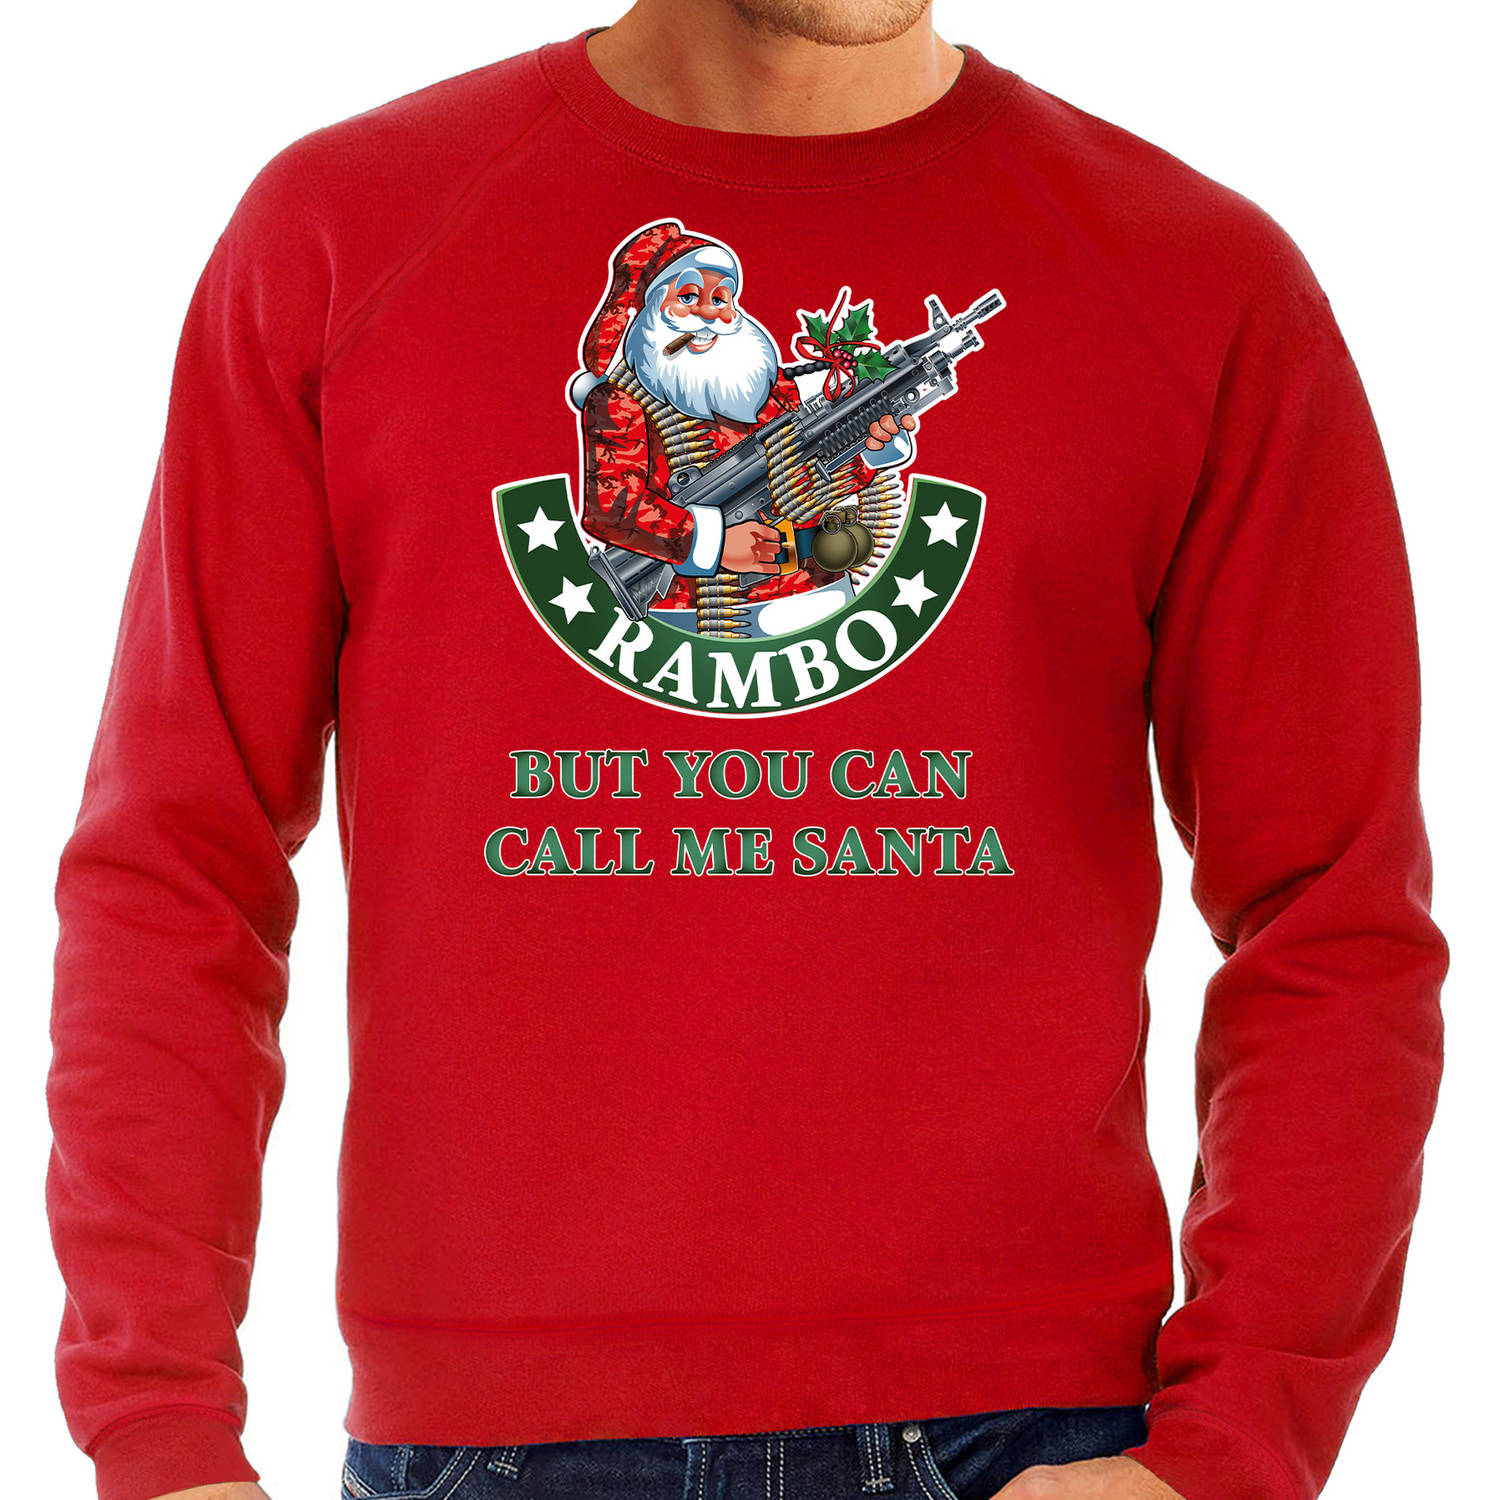 Rode foute Kersttrui / Kerstkleding Rambo but you can call me Santa voor heren grote maten 3XL (58) - kerst truien